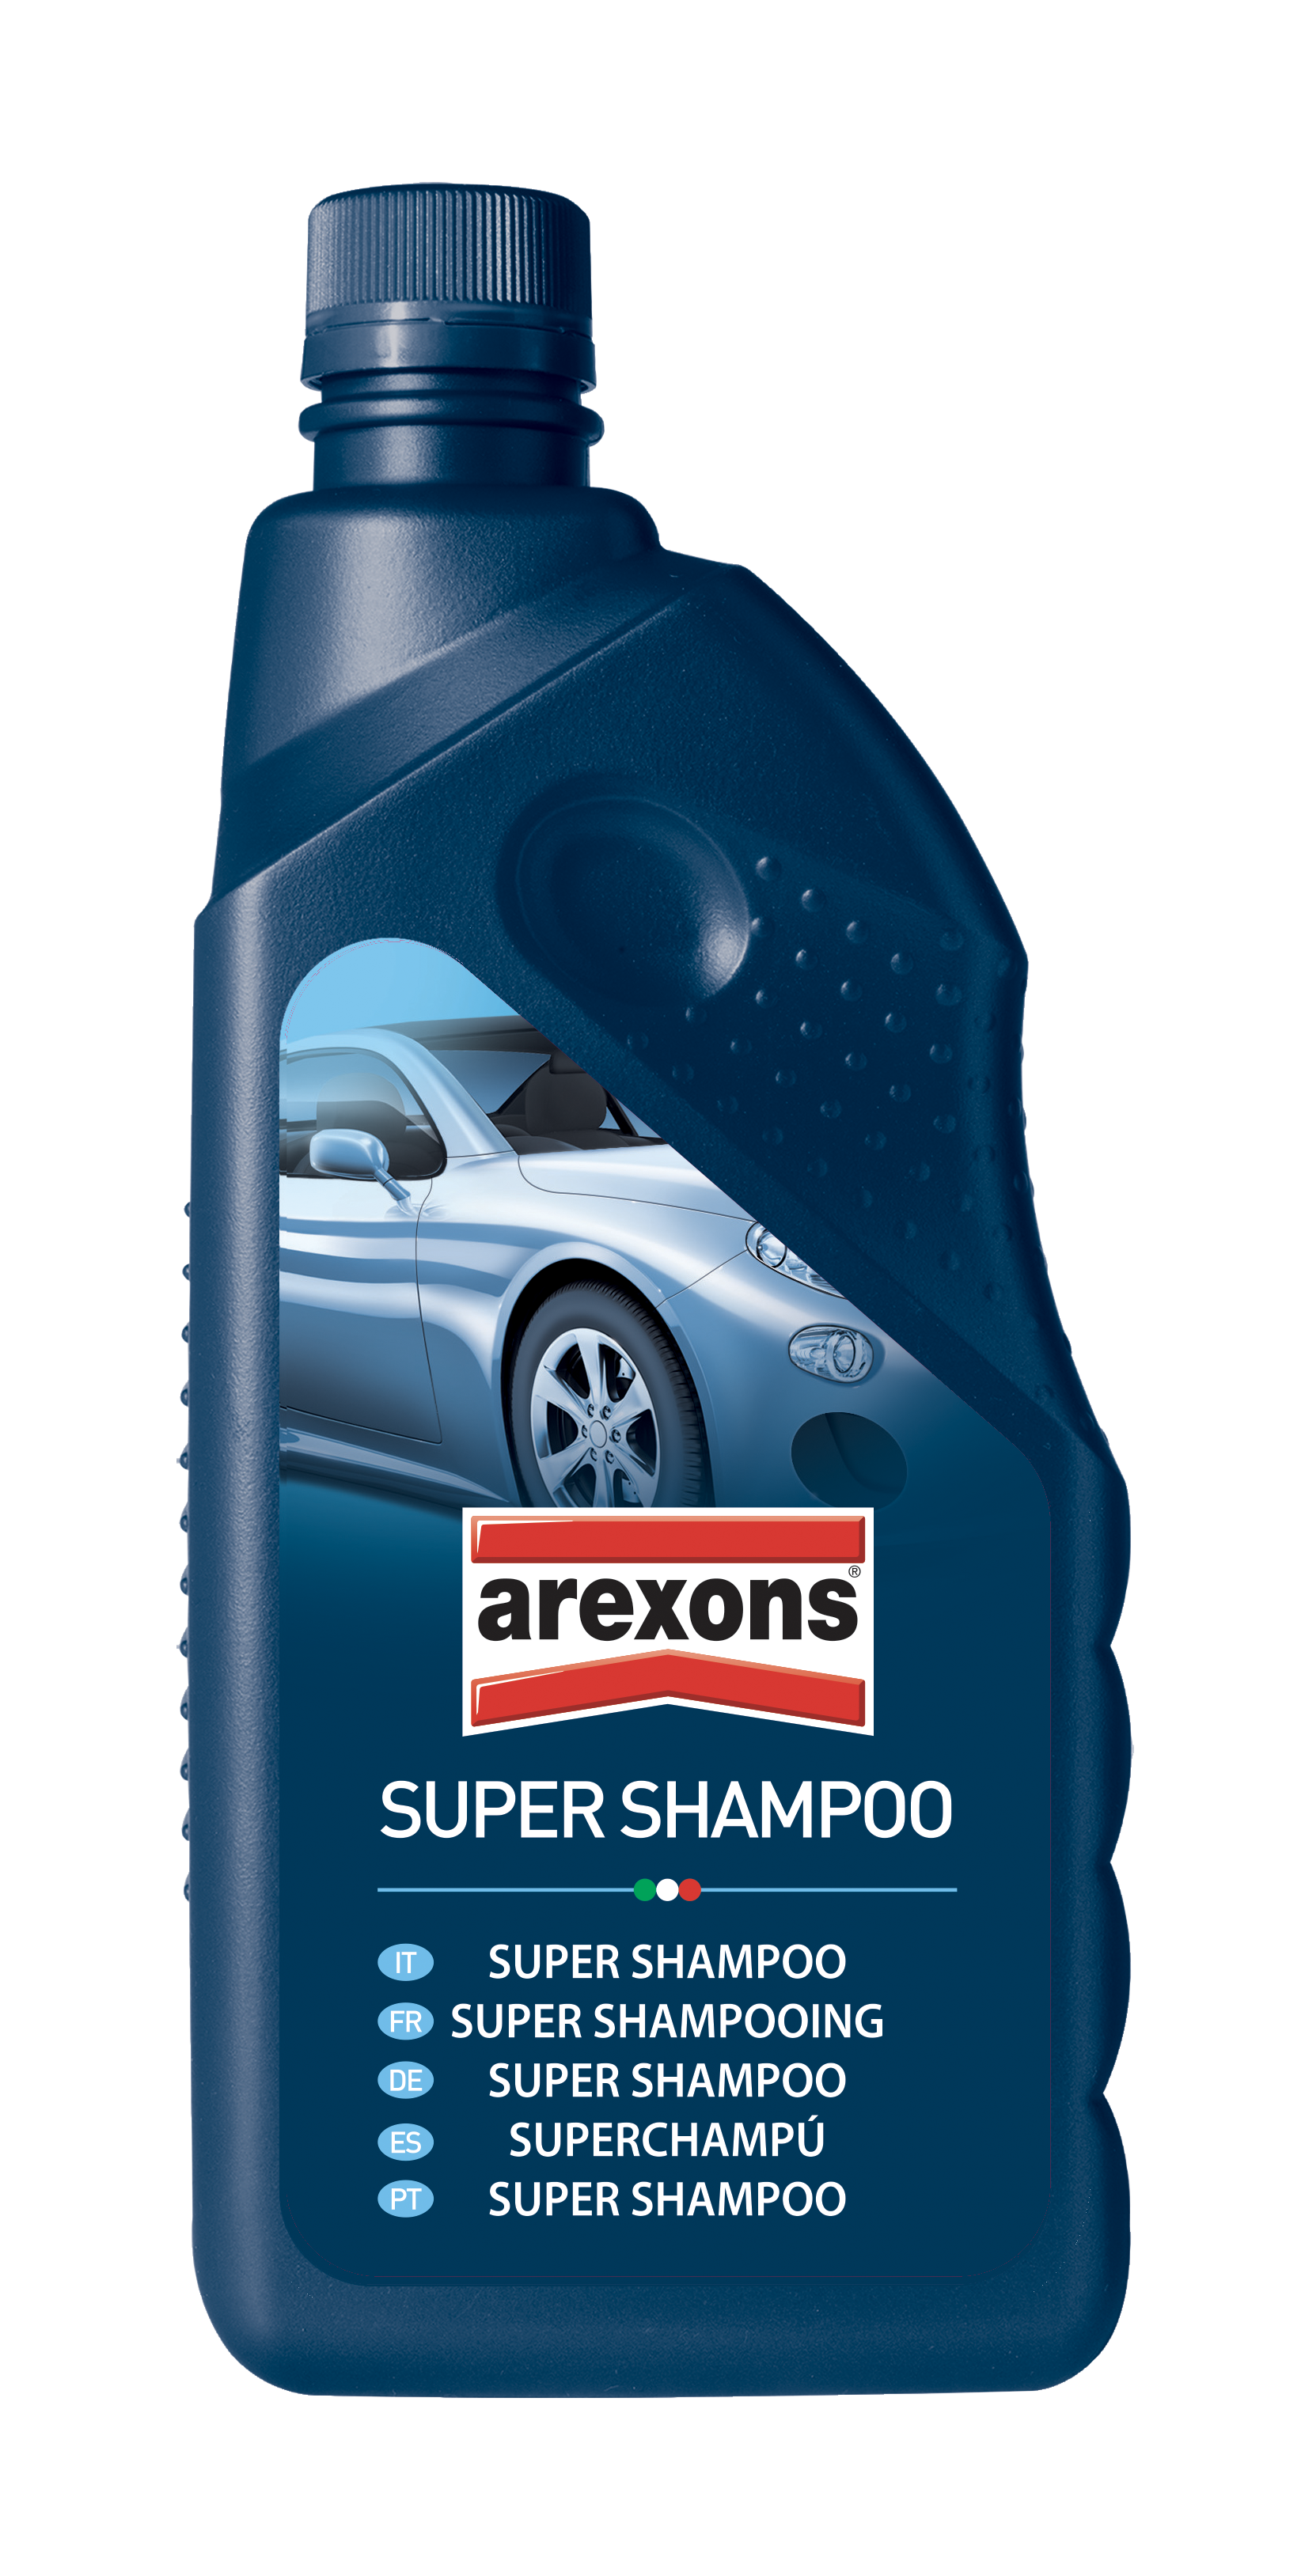 Super Shampooing